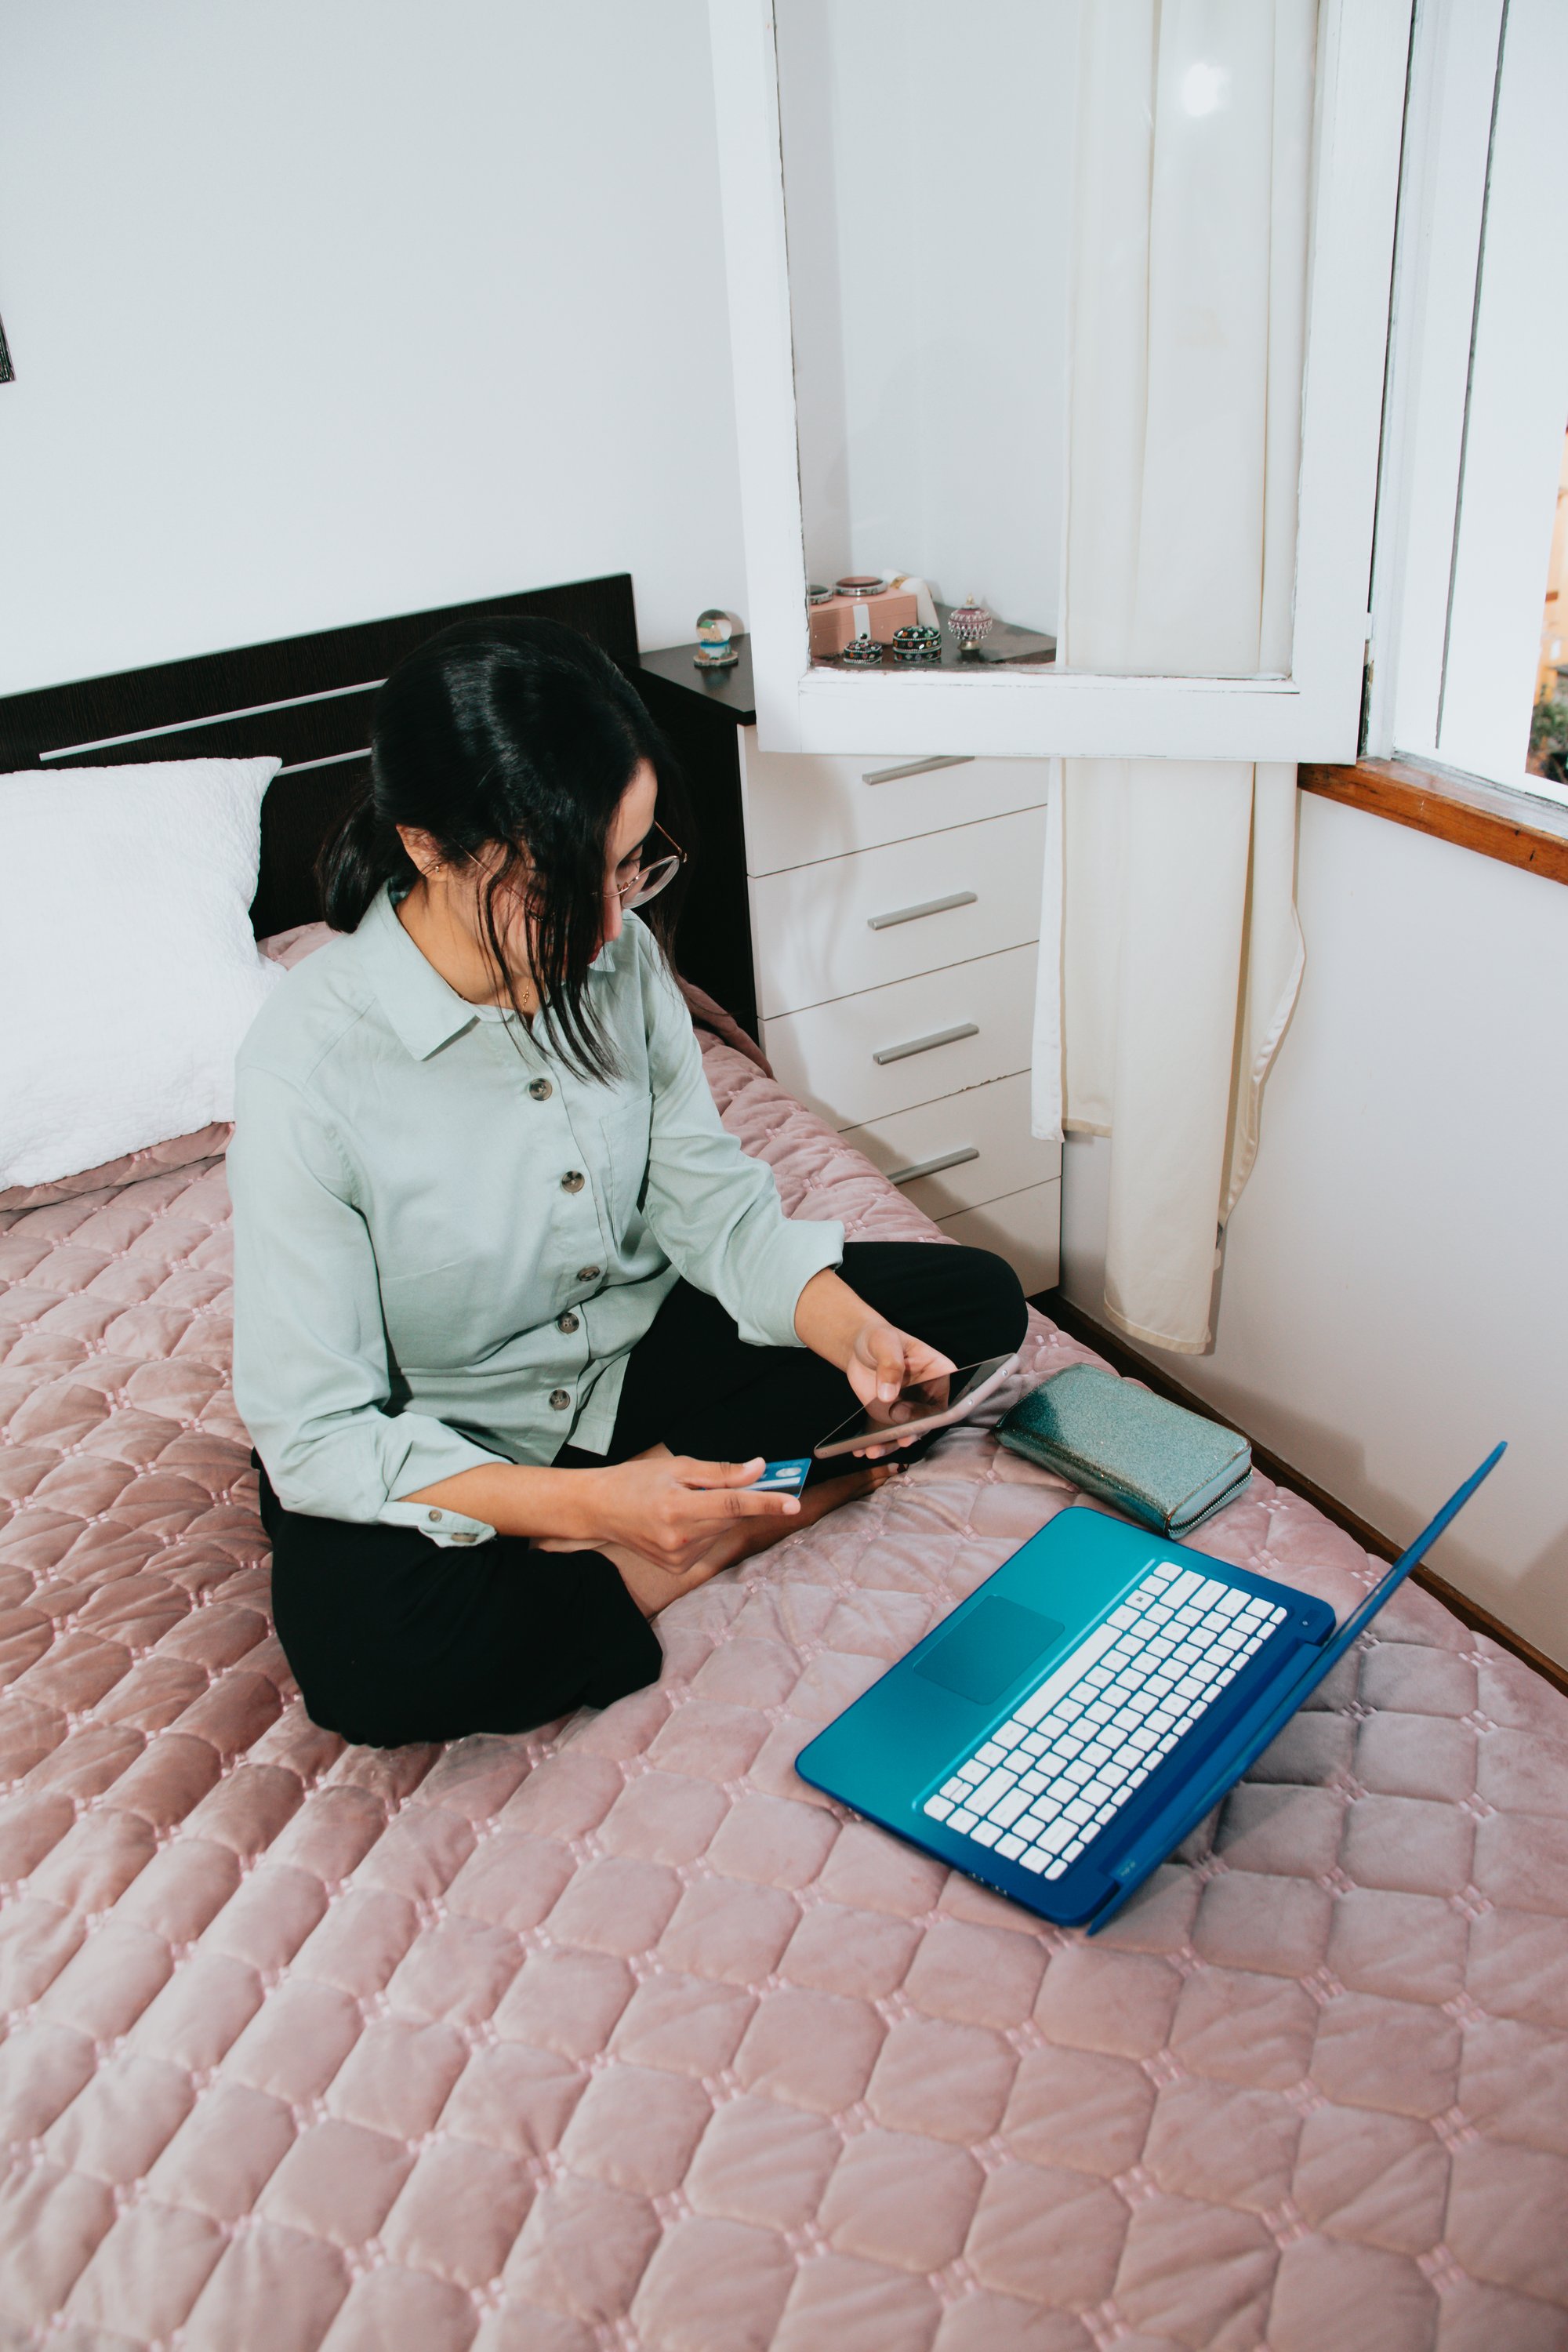 woman sitting on pink bed with her laptop and pphone 女人坐在粉红色的床上，手里拿着笔记本电脑和电话机。